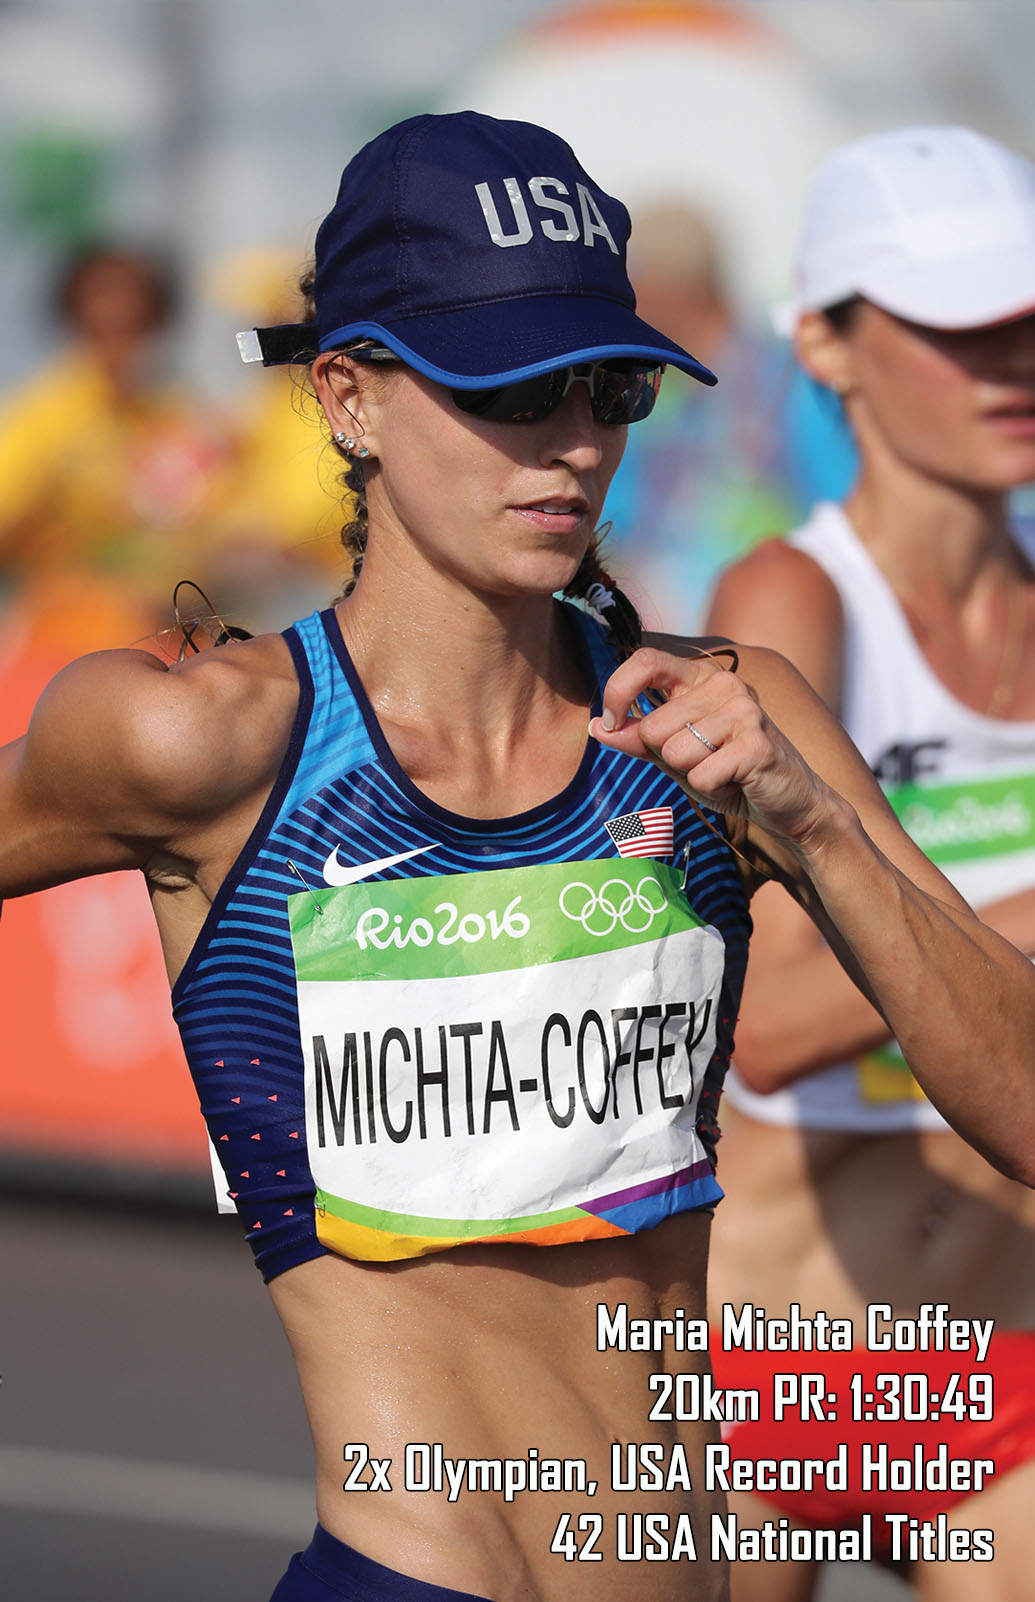 Maria Michta-Coffey